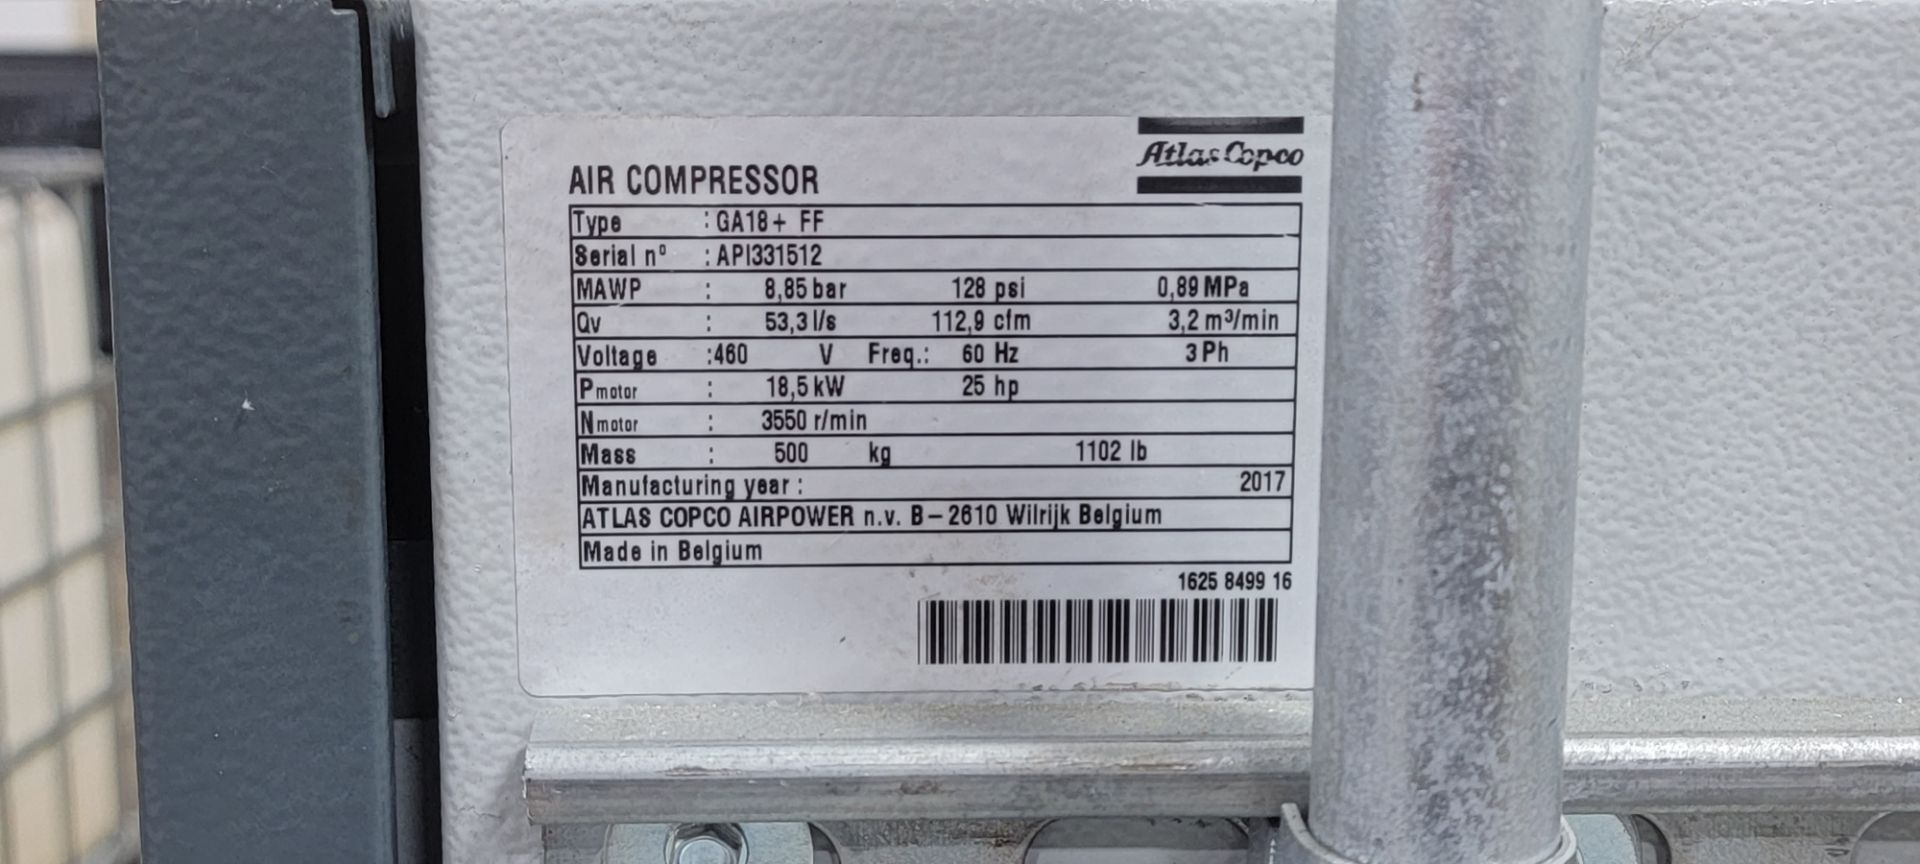 Atlas Copco GA18+FF 25-HP Rotary Screw Air Compressor (Late Delivery) - Image 4 of 4